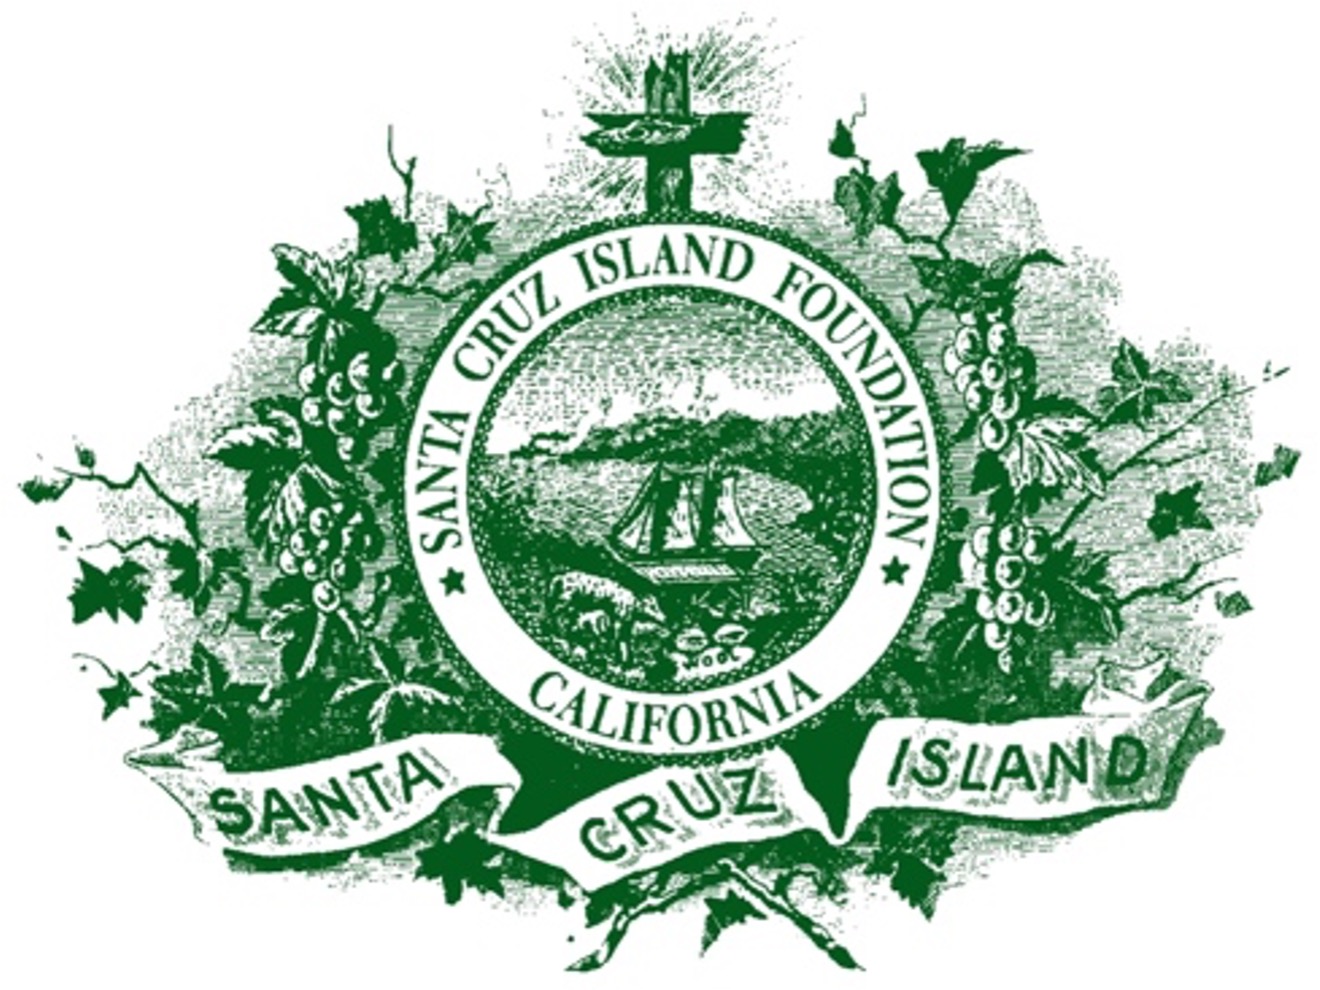 Santa Cruz Island Foundation logo